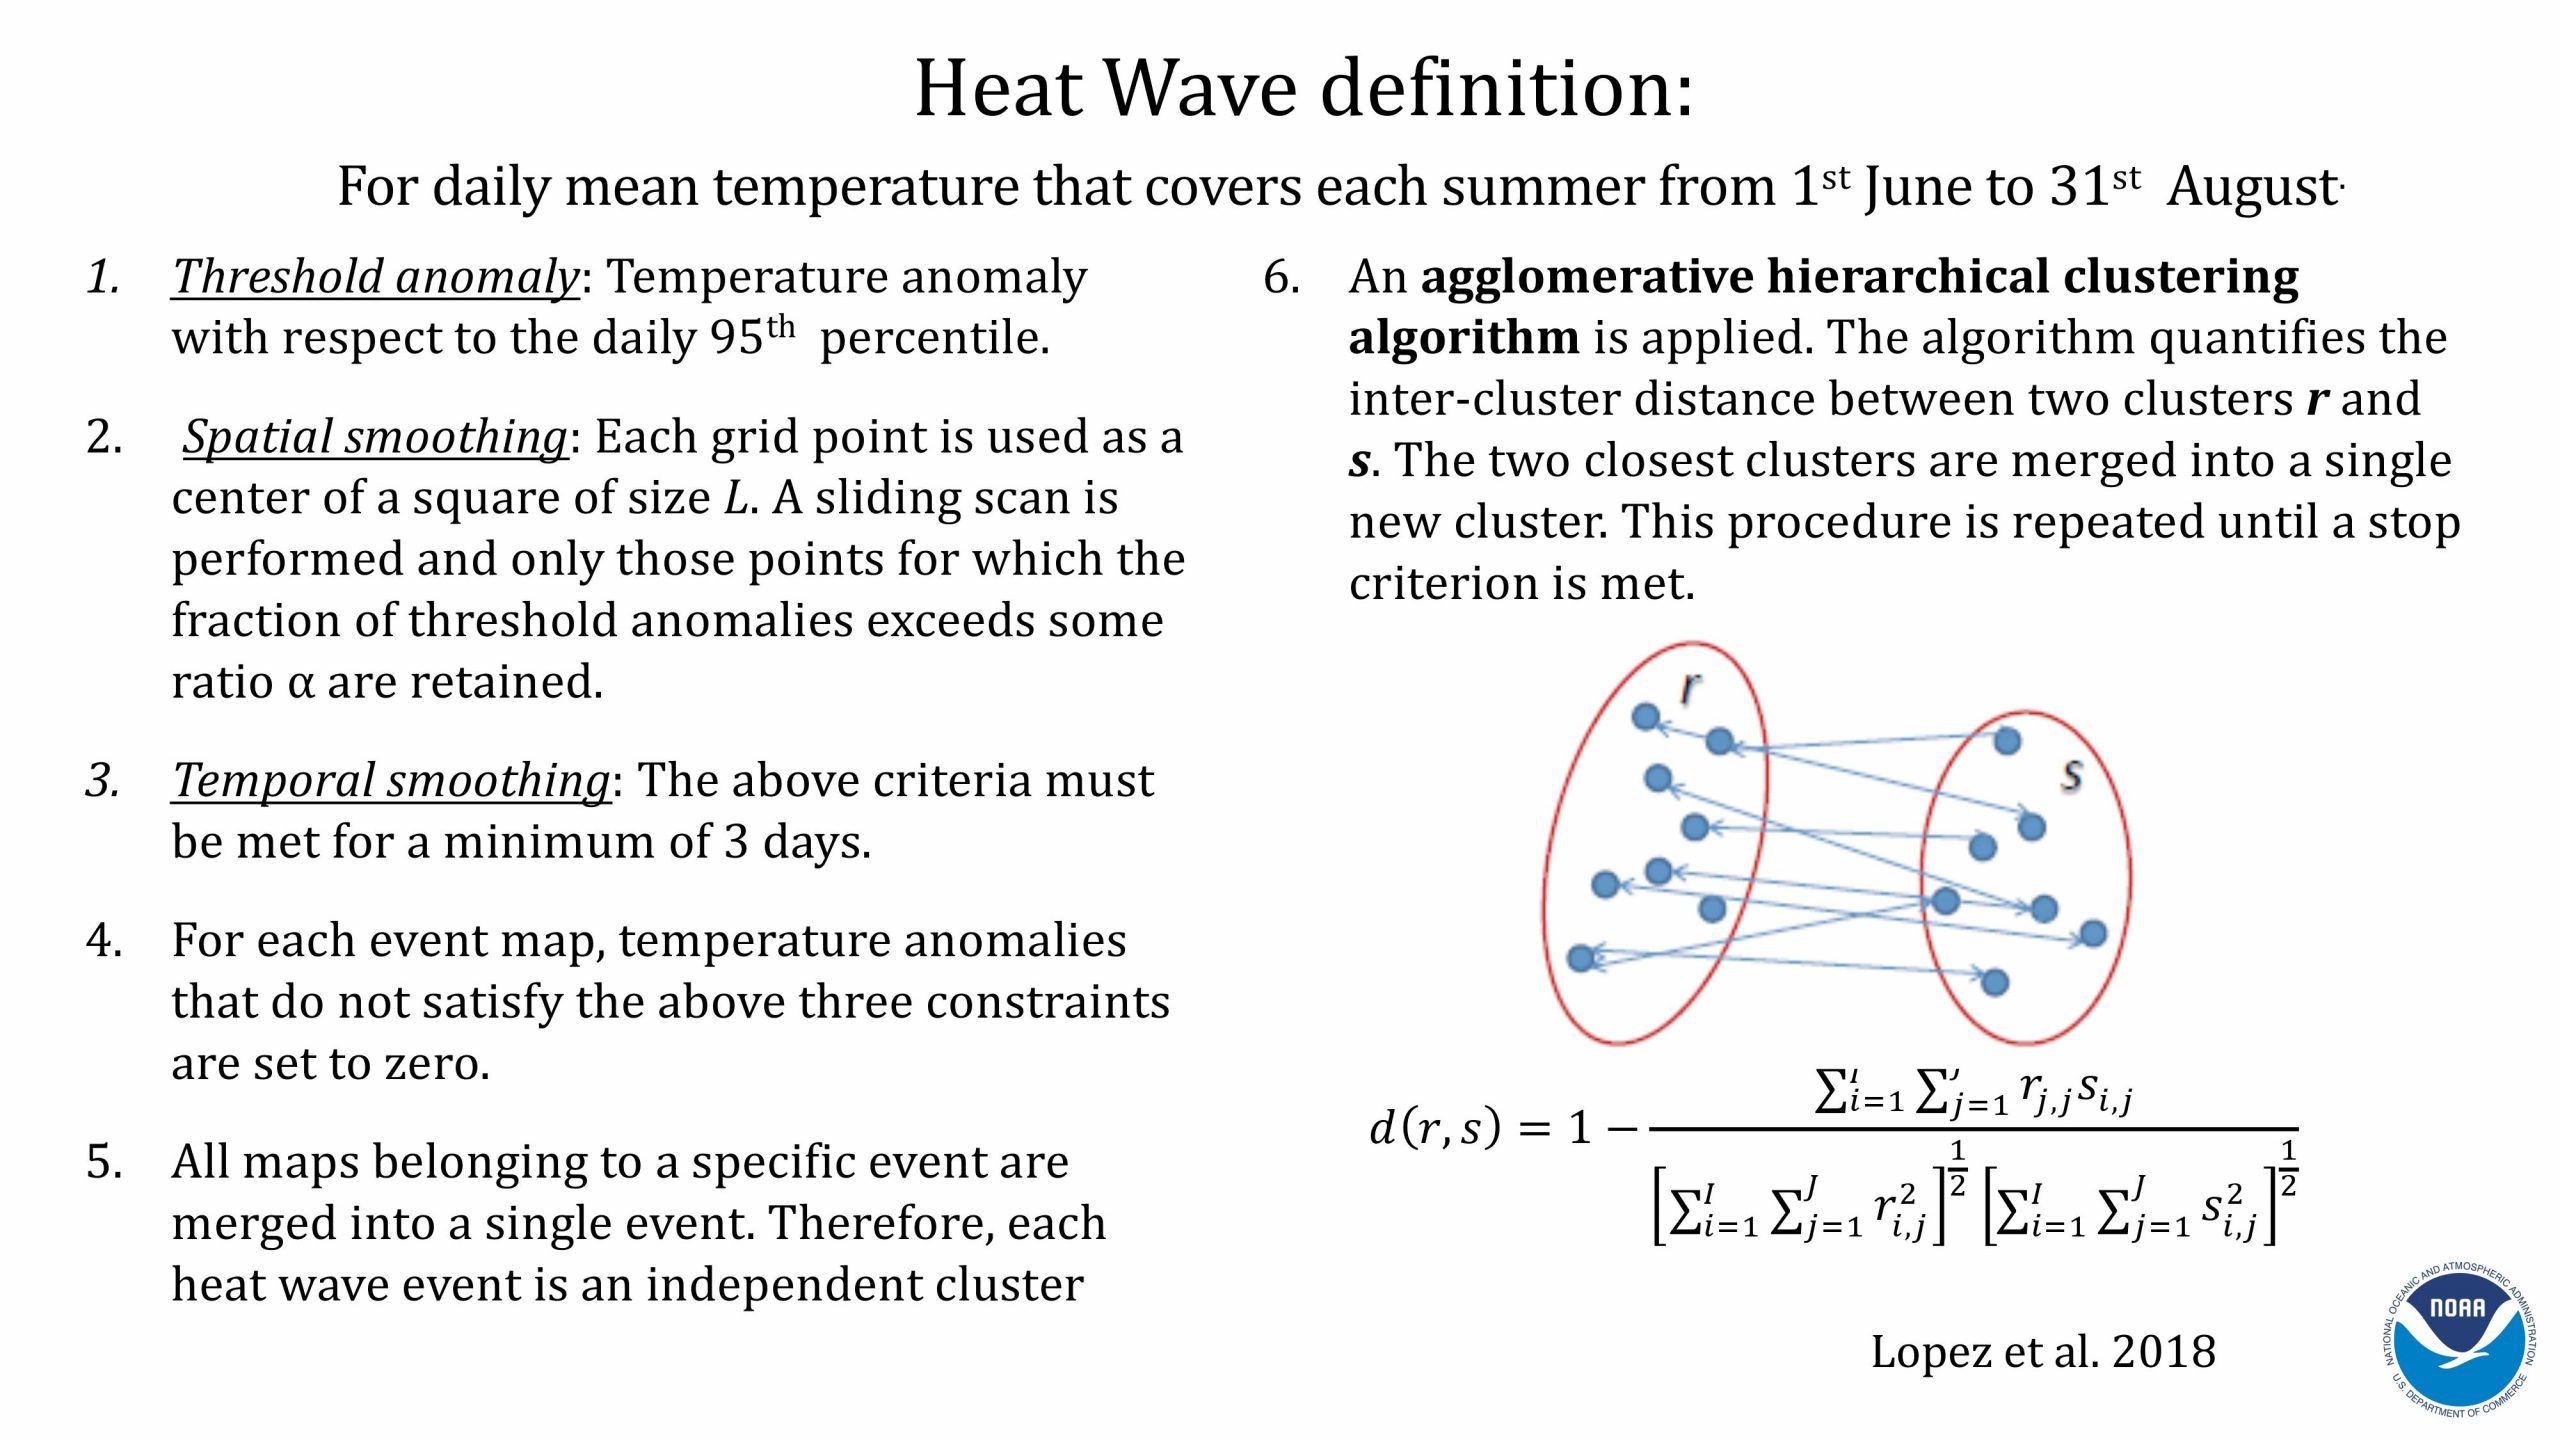 Hosmay Lopez Monsoon and Heat Waves presentation. Slide 10